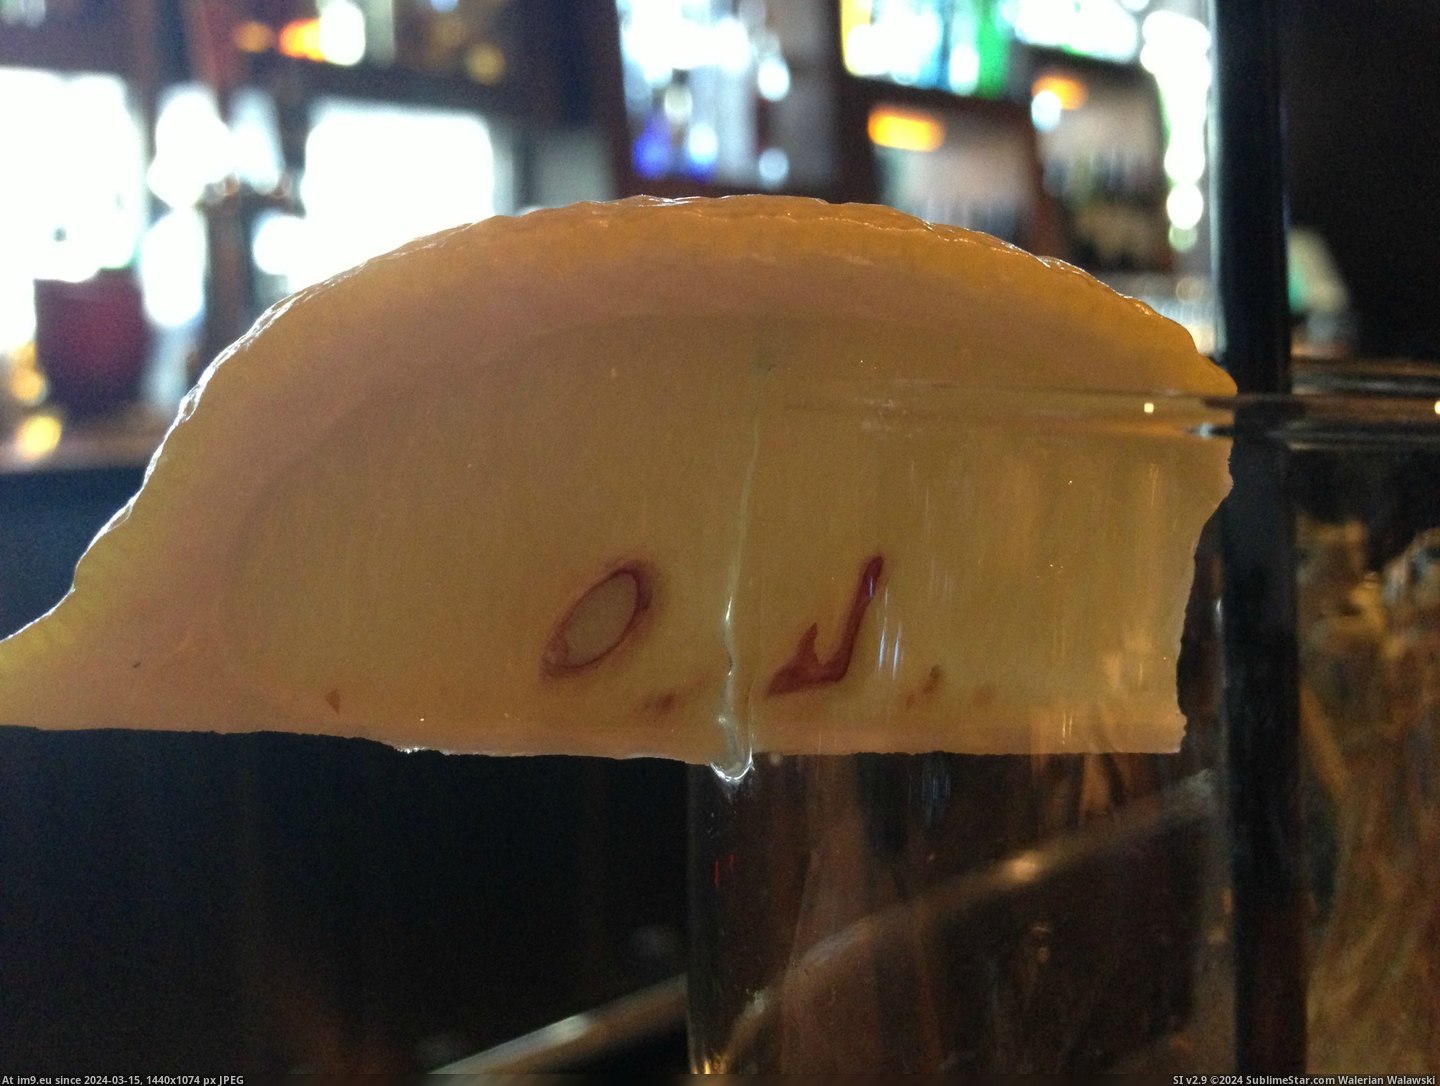 #Lemon #Spelled #Slice #Seeds [Mildlyinteresting] The seeds in this lemon slice spelled Pic. (Bild von album My r/MILDLYINTERESTING favs))